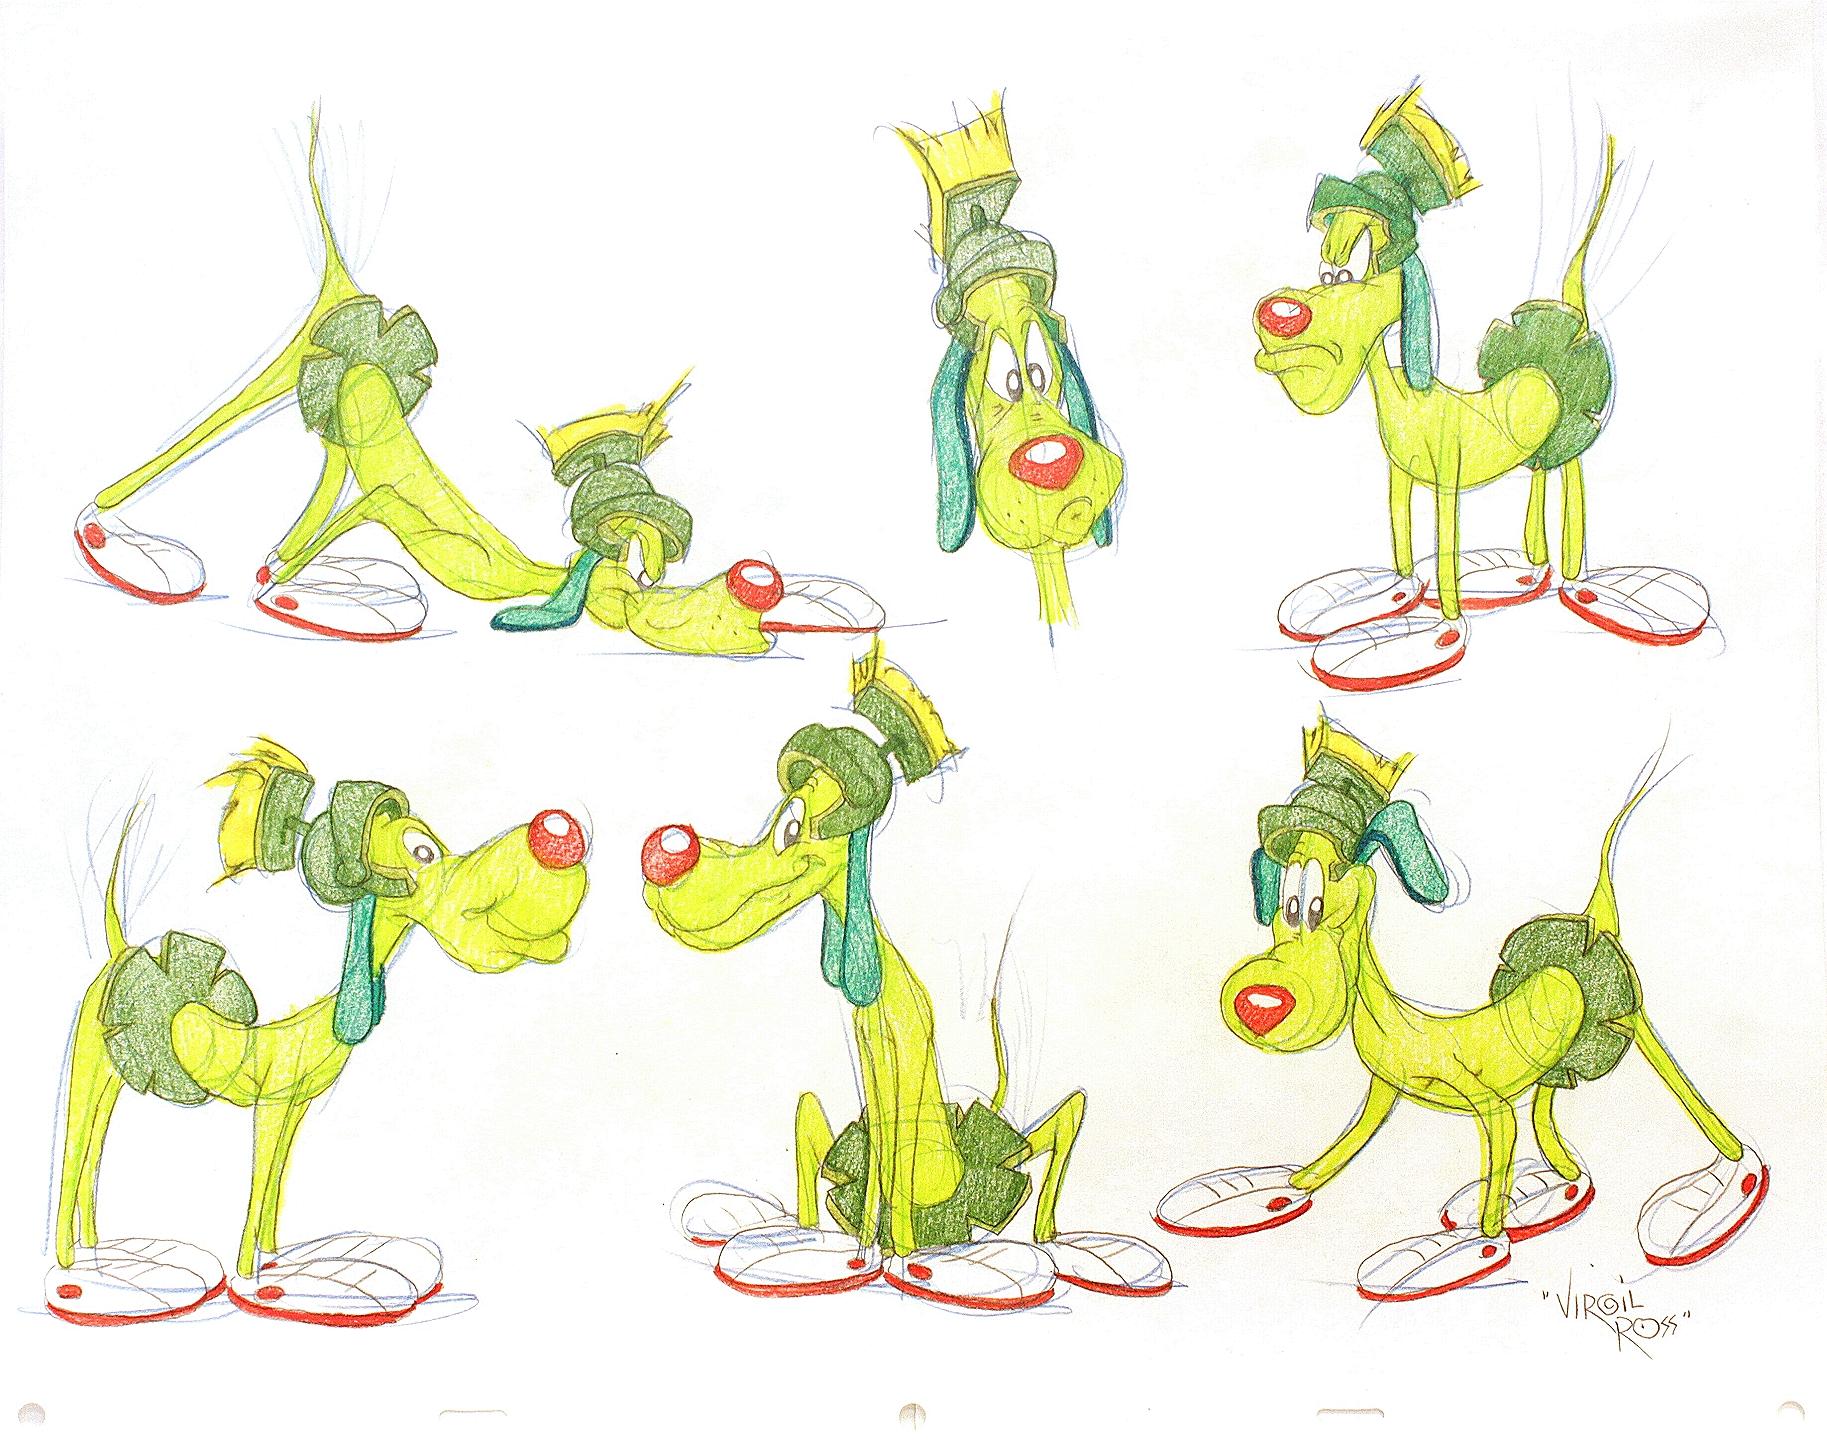 Author: ross, virgil.
Title: k-9 martian dog. (six original drawings).
Publisher: Warner Brothers Studios, (circa 1990s)
Description: six original drawings of witch hazel. 17